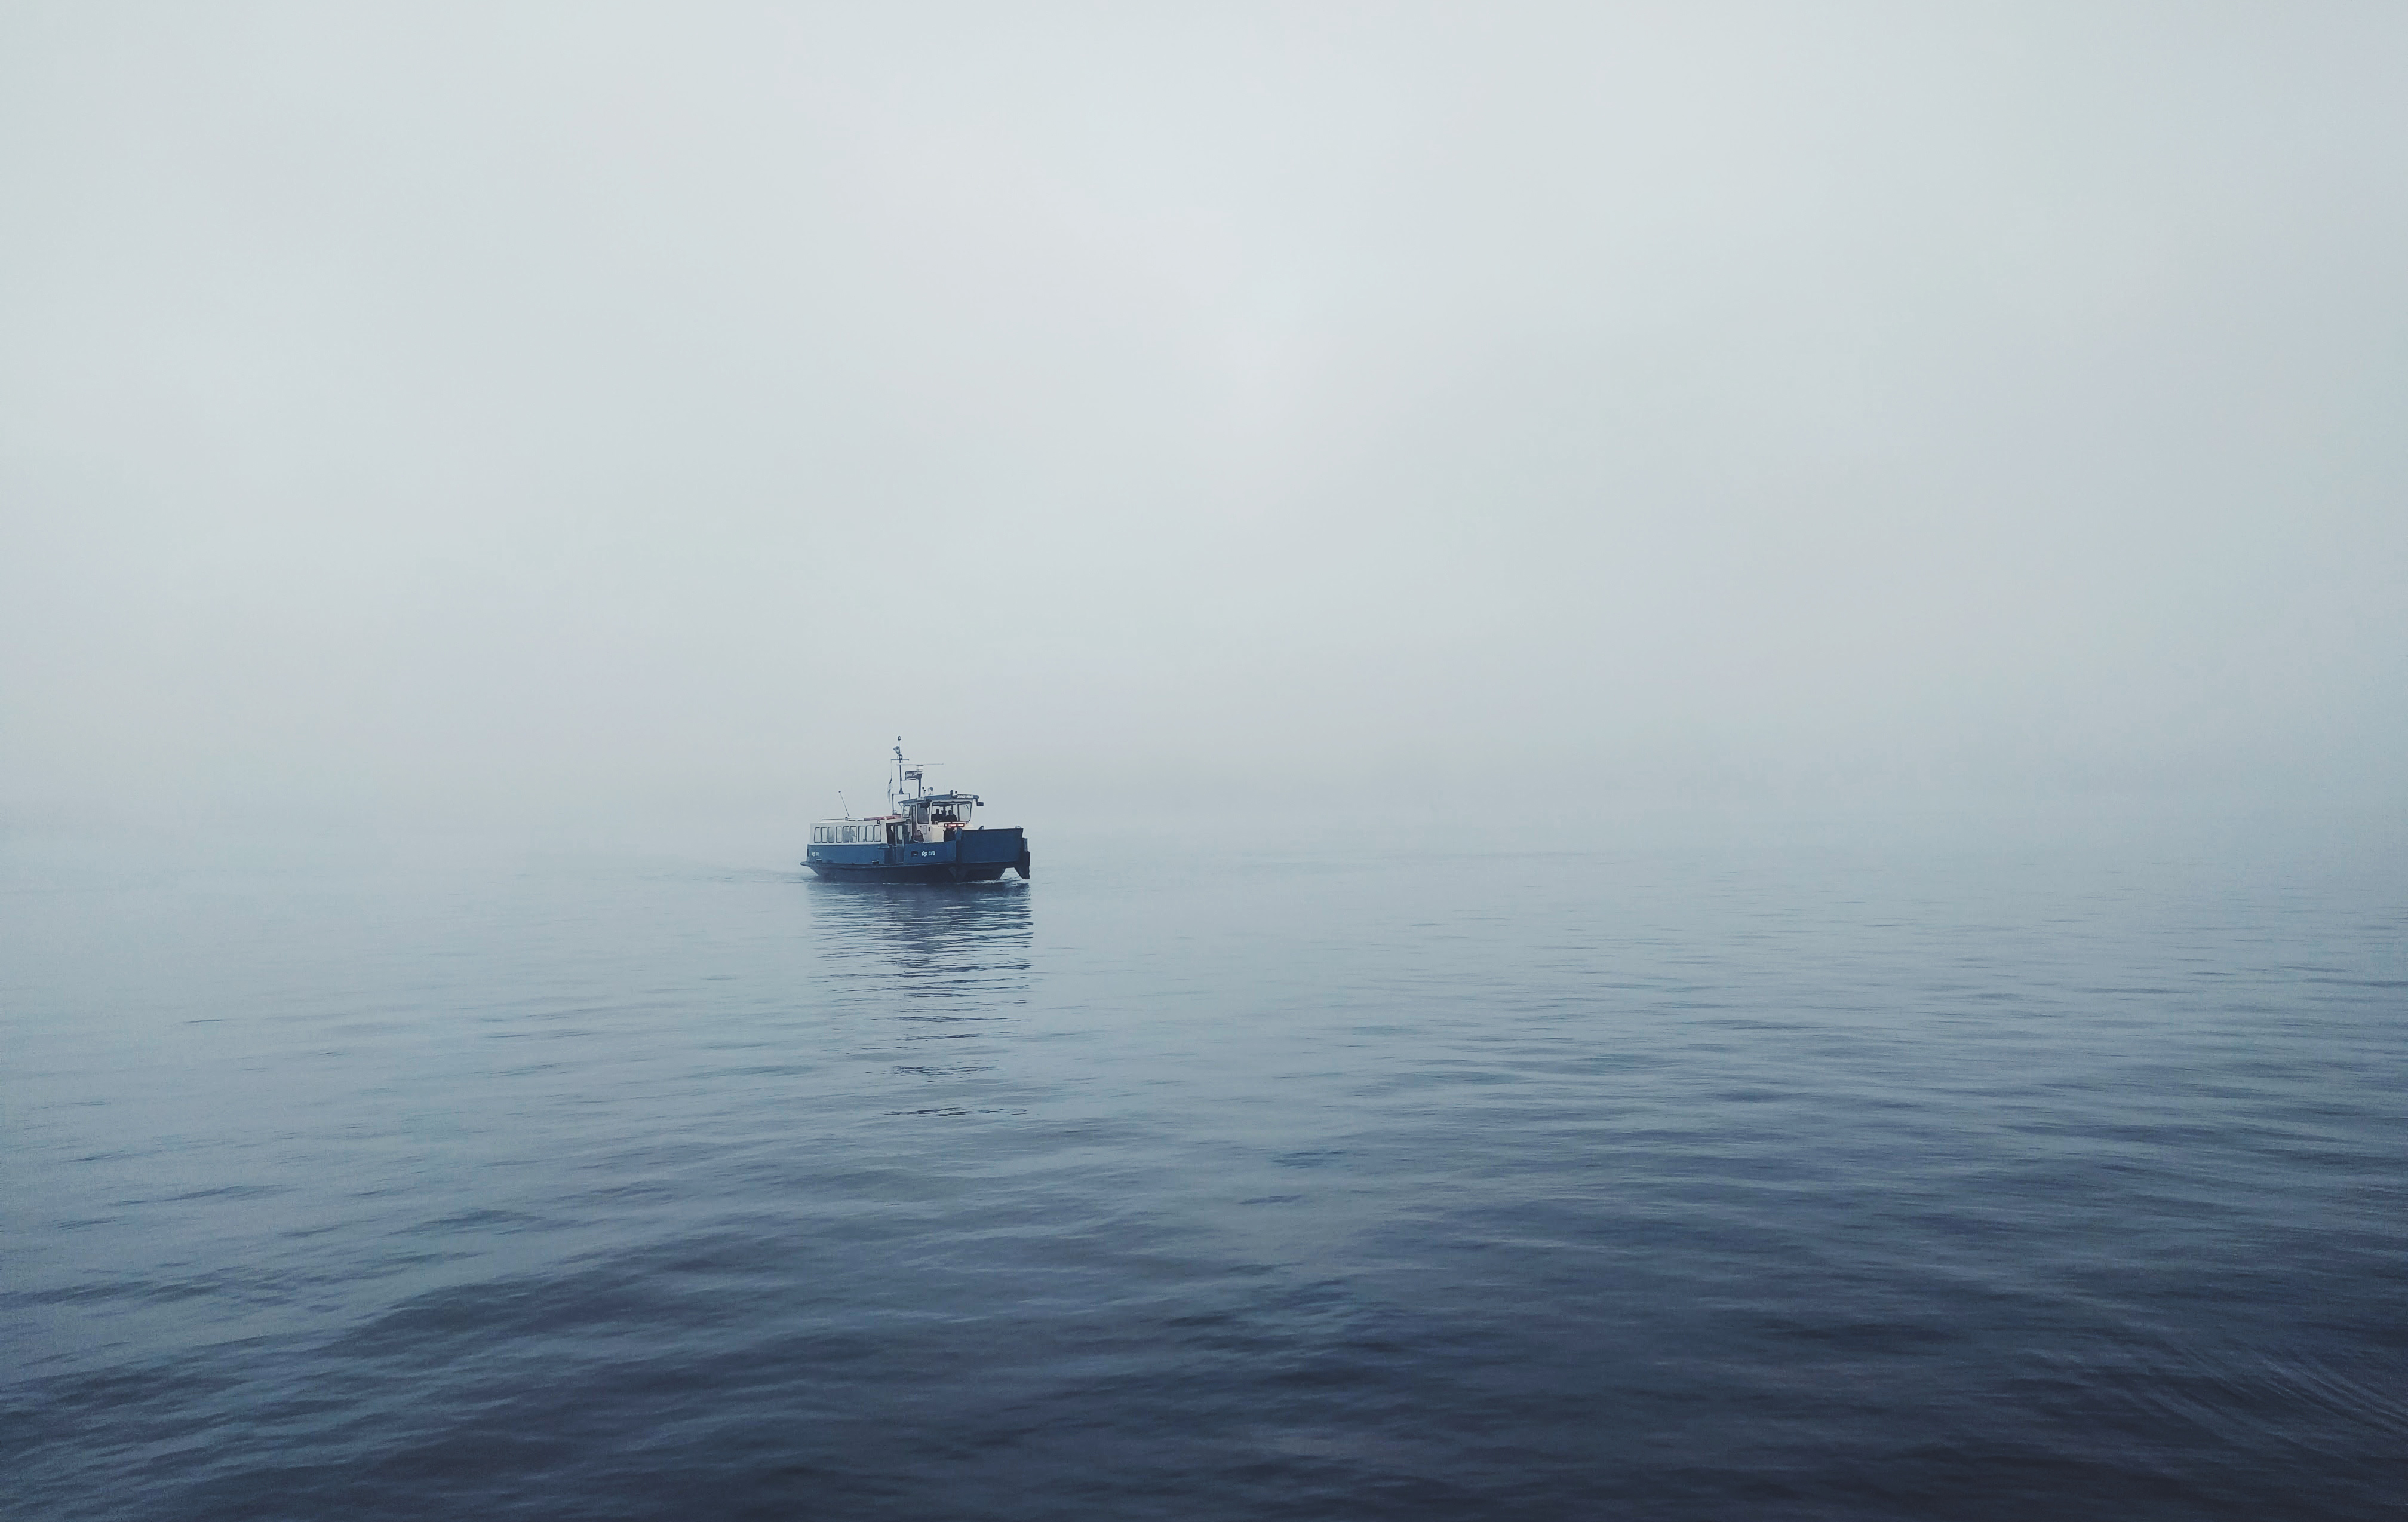 Корабль в океане одинокий. Корабль в тумане. Корабль вдалеке. Посреди океана. Одинокий корабль в океане.